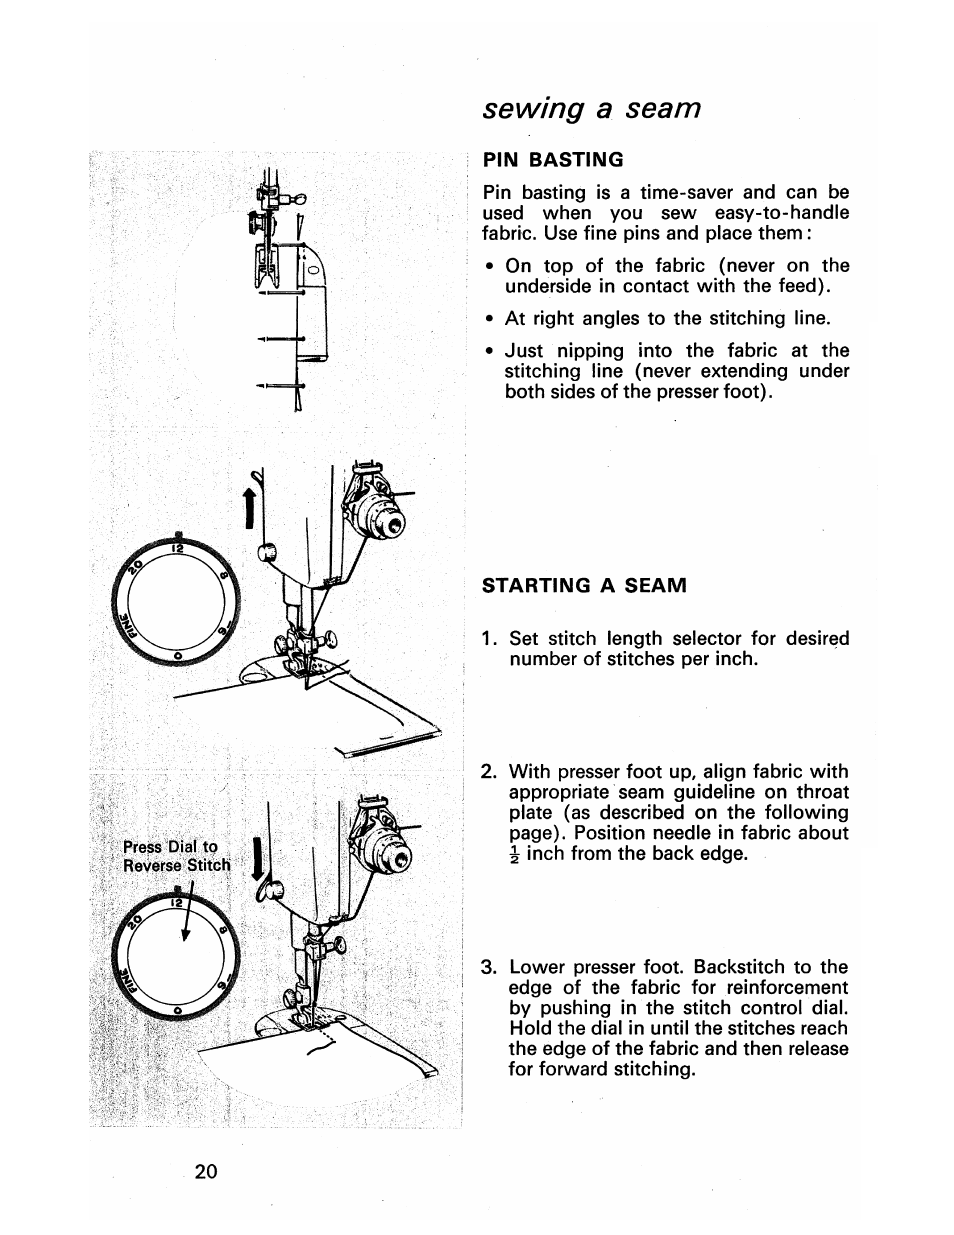 Sewmg a seam, Pin basting, Starting a seam | Sewing a seam, Ilitflsftlii | SINGER 413 User Manual | Page 22 / 64